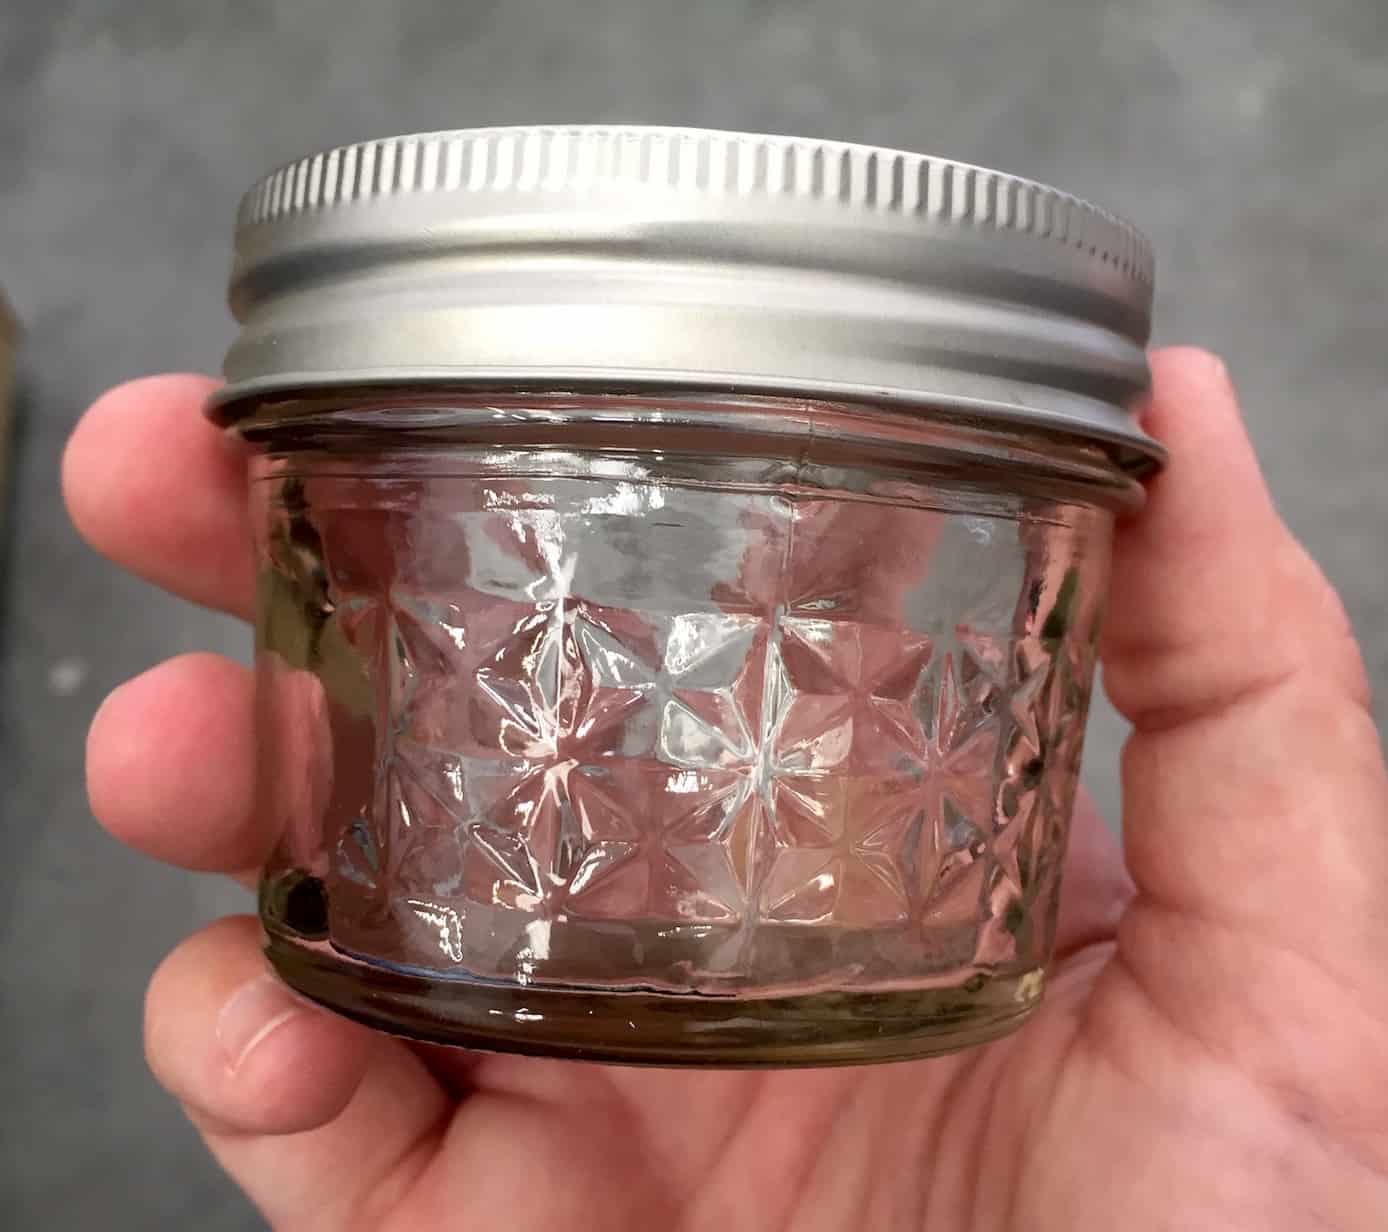 4 oz glass mason jar